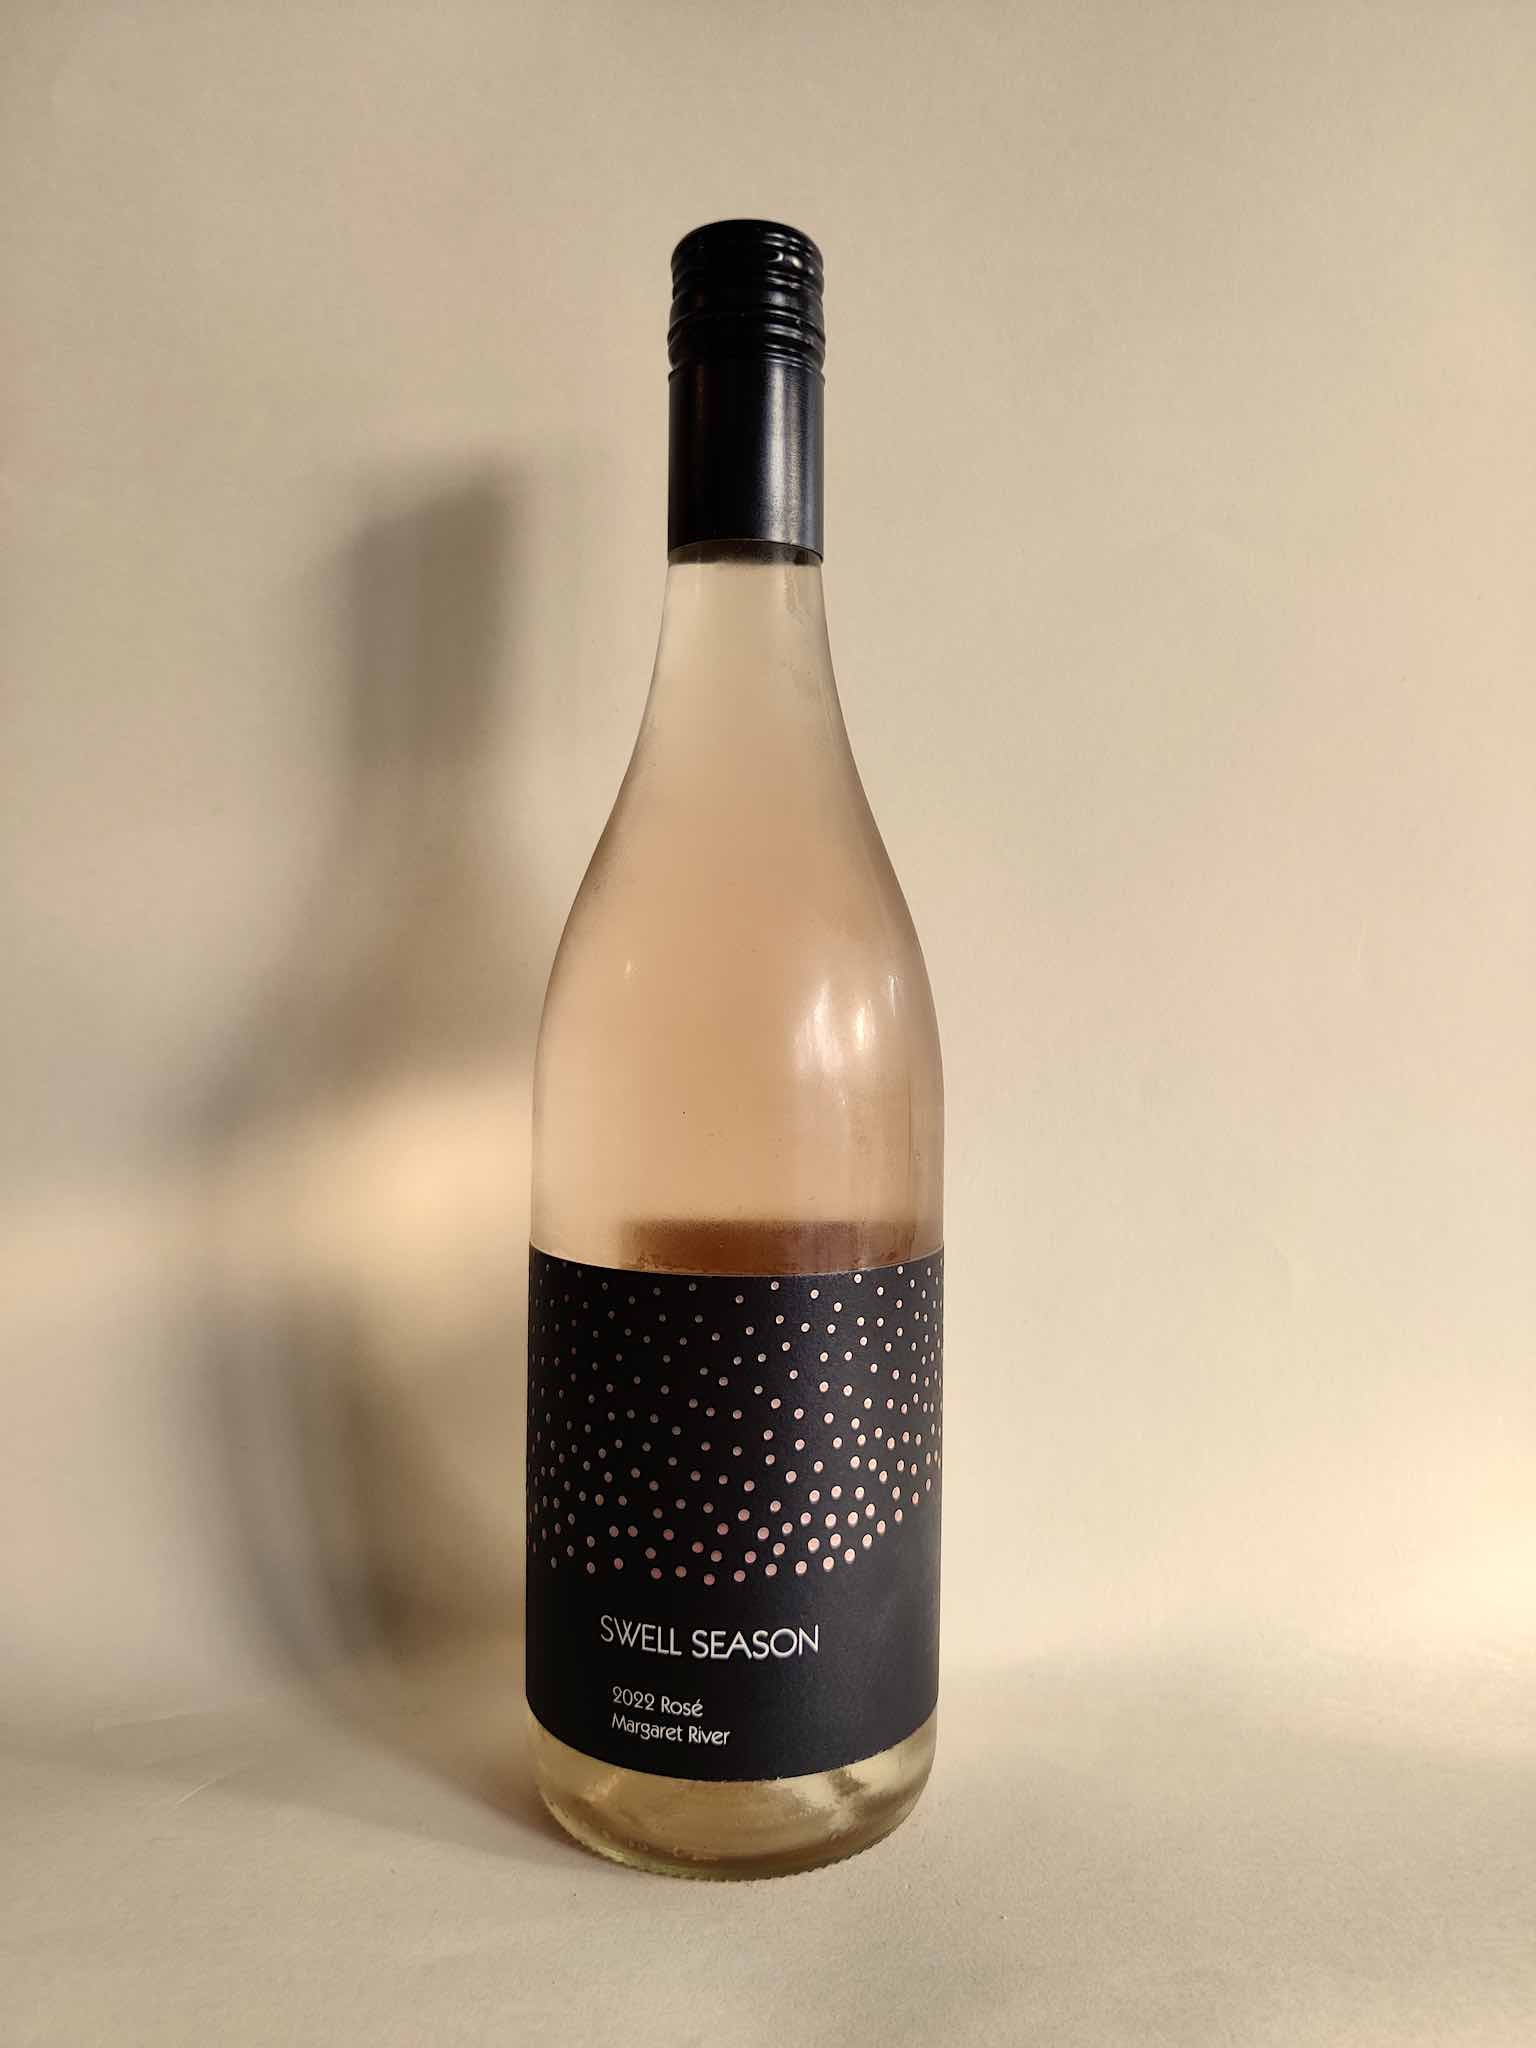 A bottle of Swell Season Rosé from Margaret River, Western Australia. 